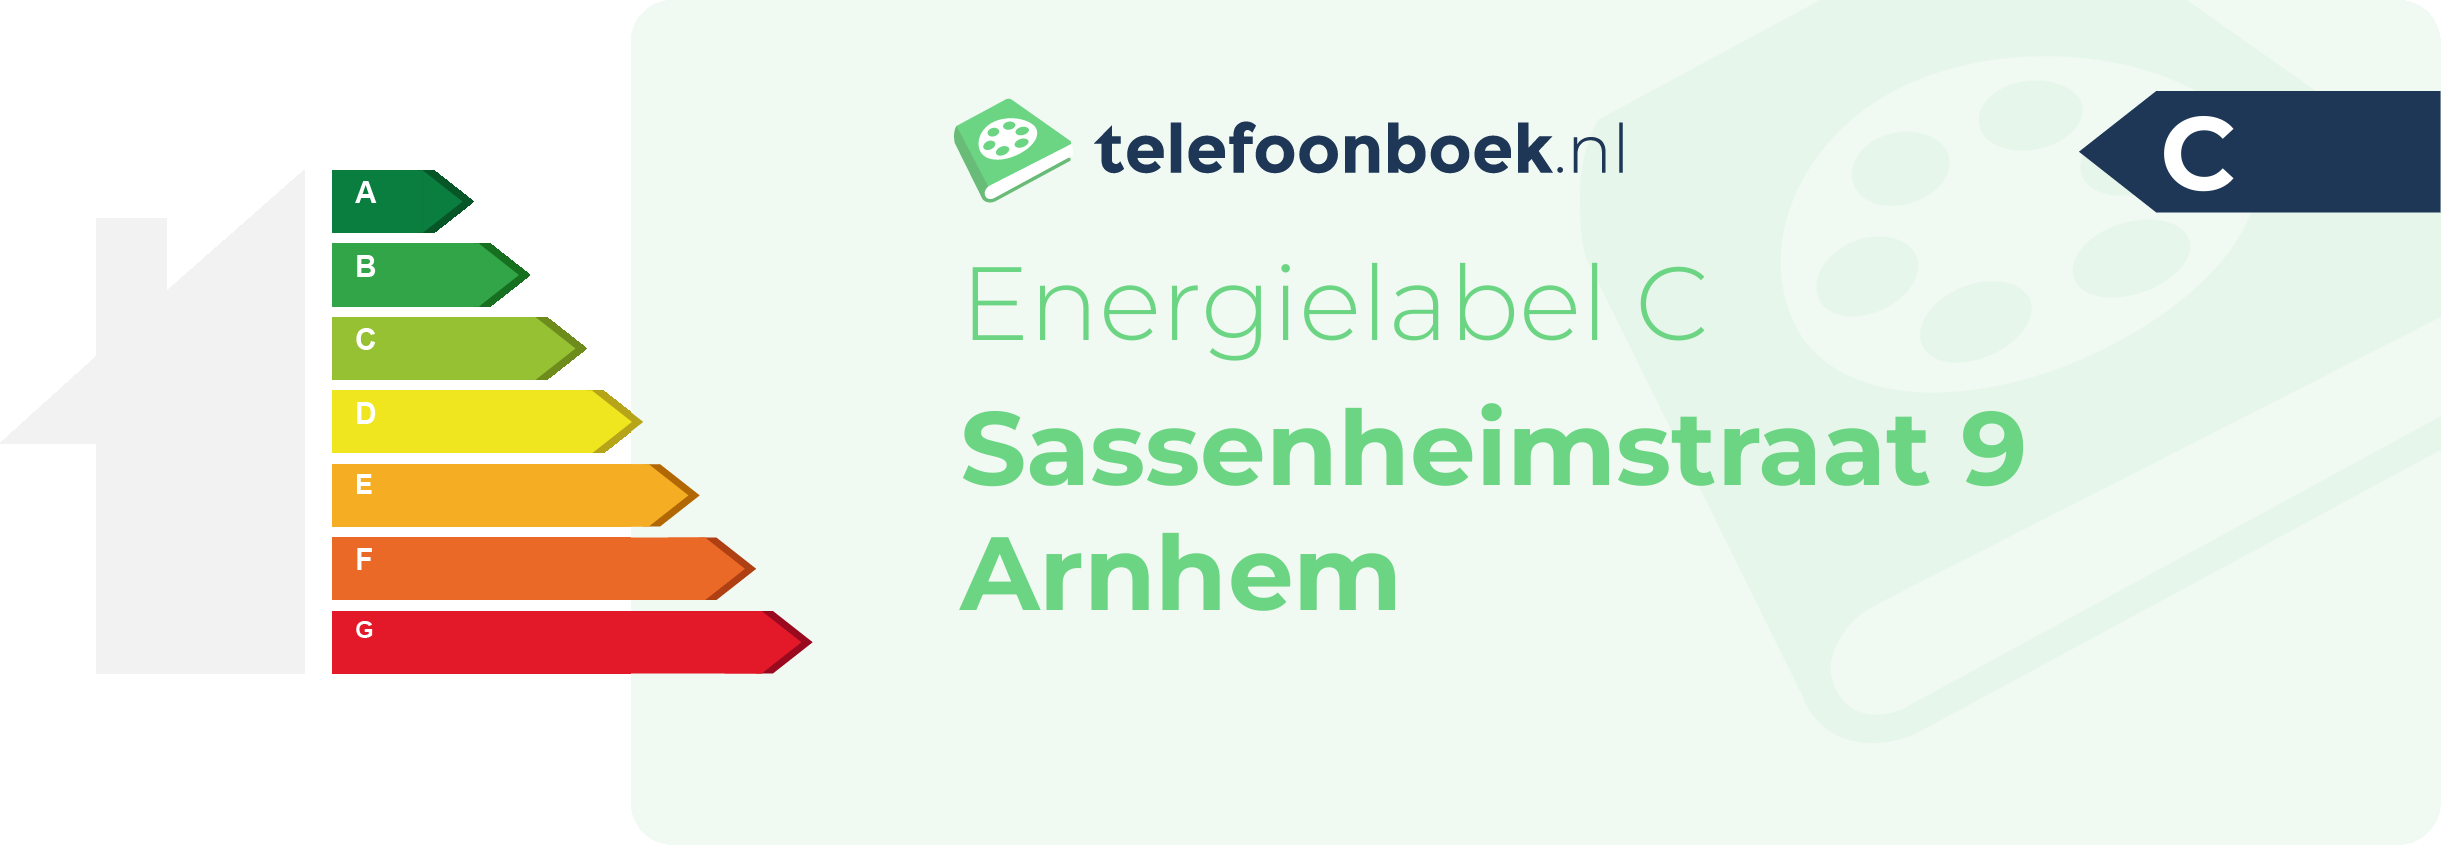 Energielabel Sassenheimstraat 9 Arnhem